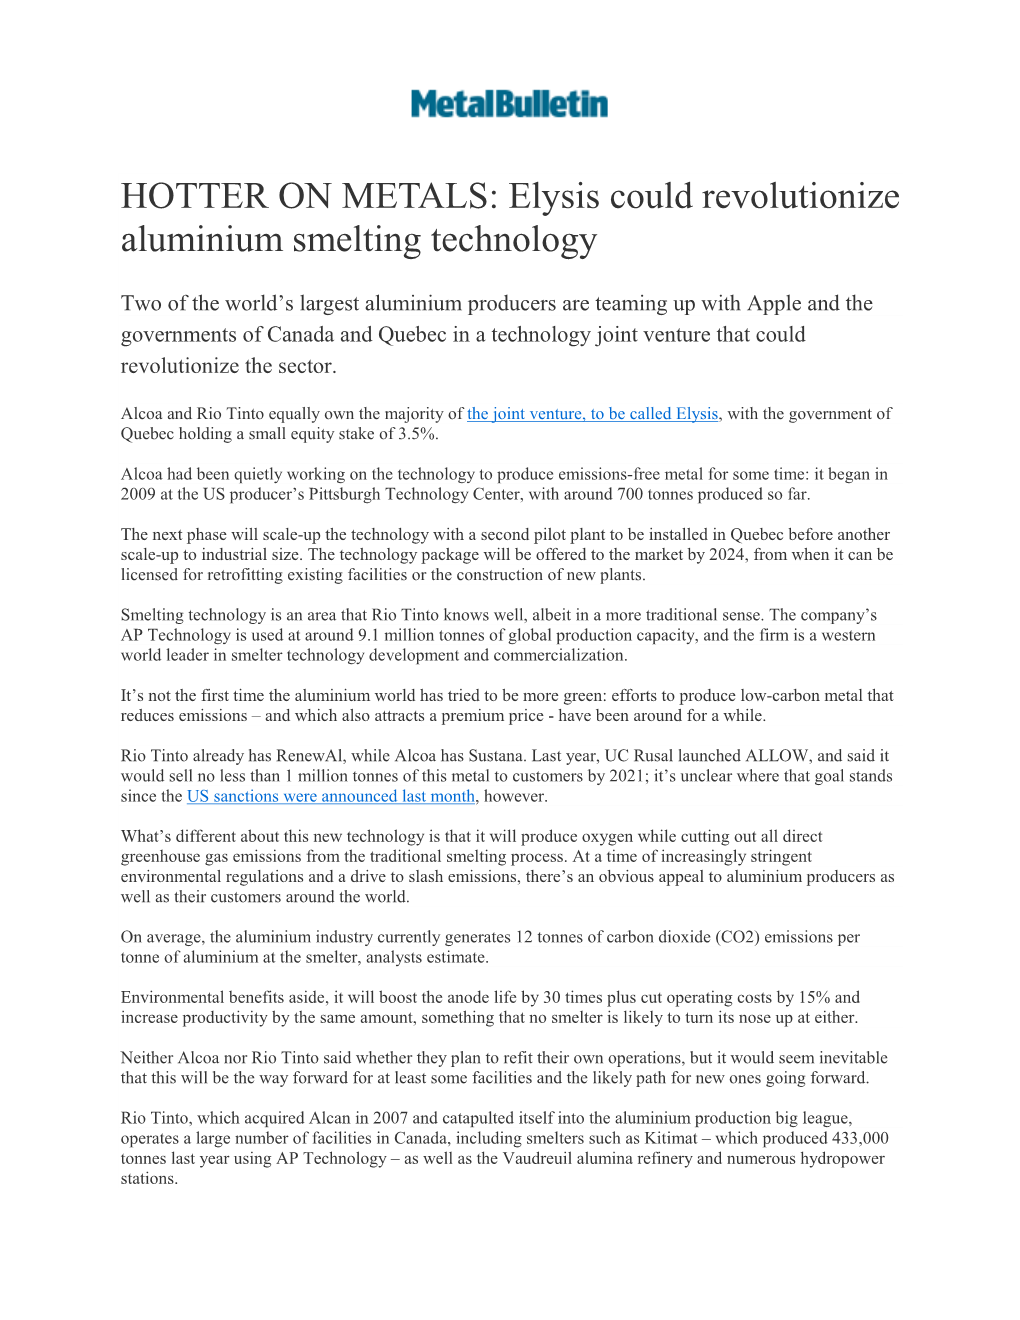 HOTTER on METALS: Elysis Could Revolutionize Aluminium Smelting Technology